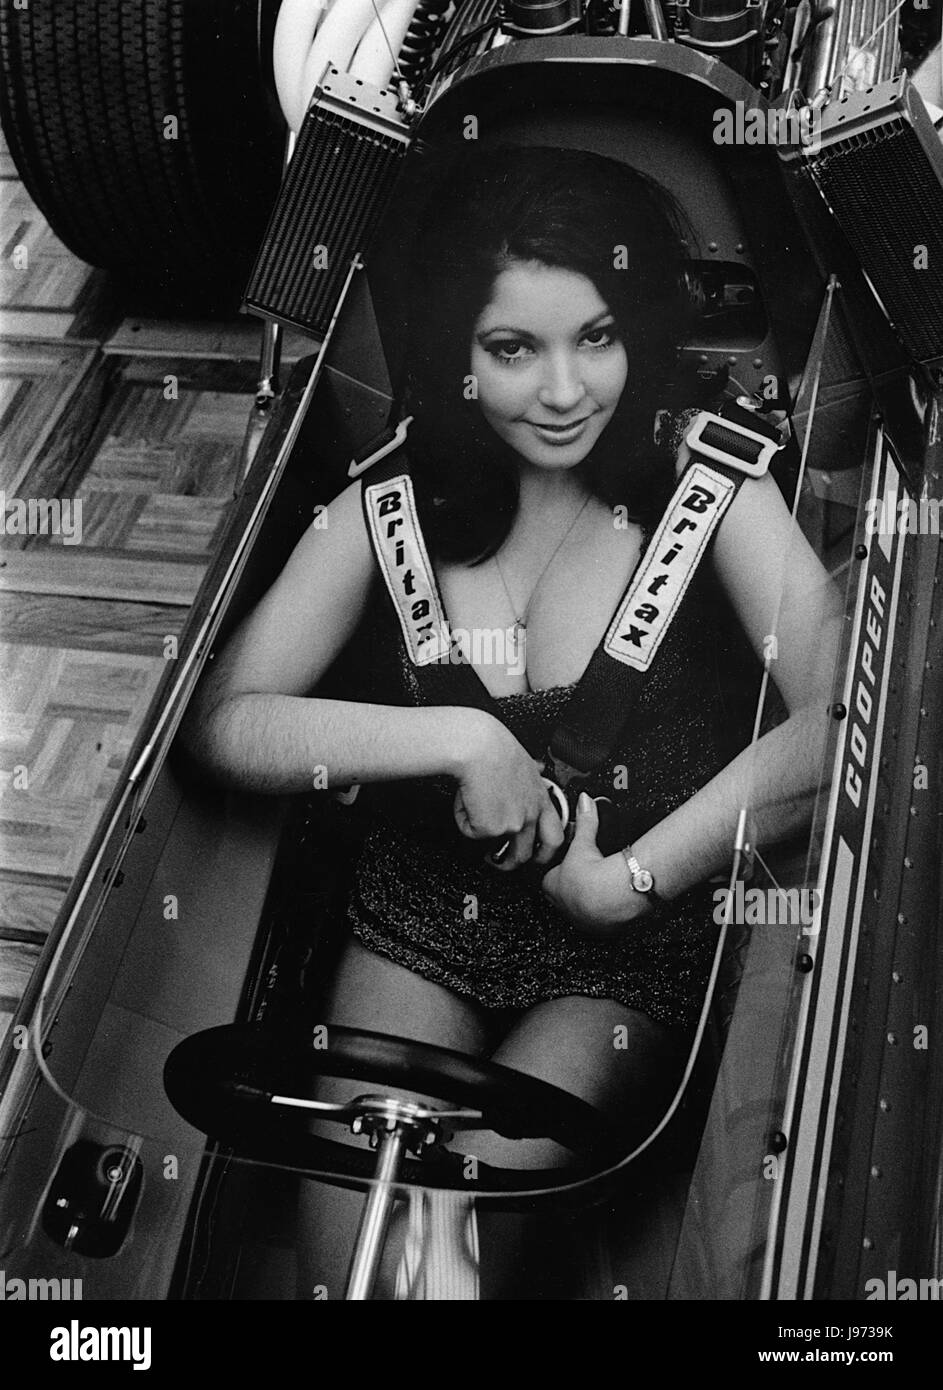 1969 Racing Car show, Cooper F5000 Stock Photo